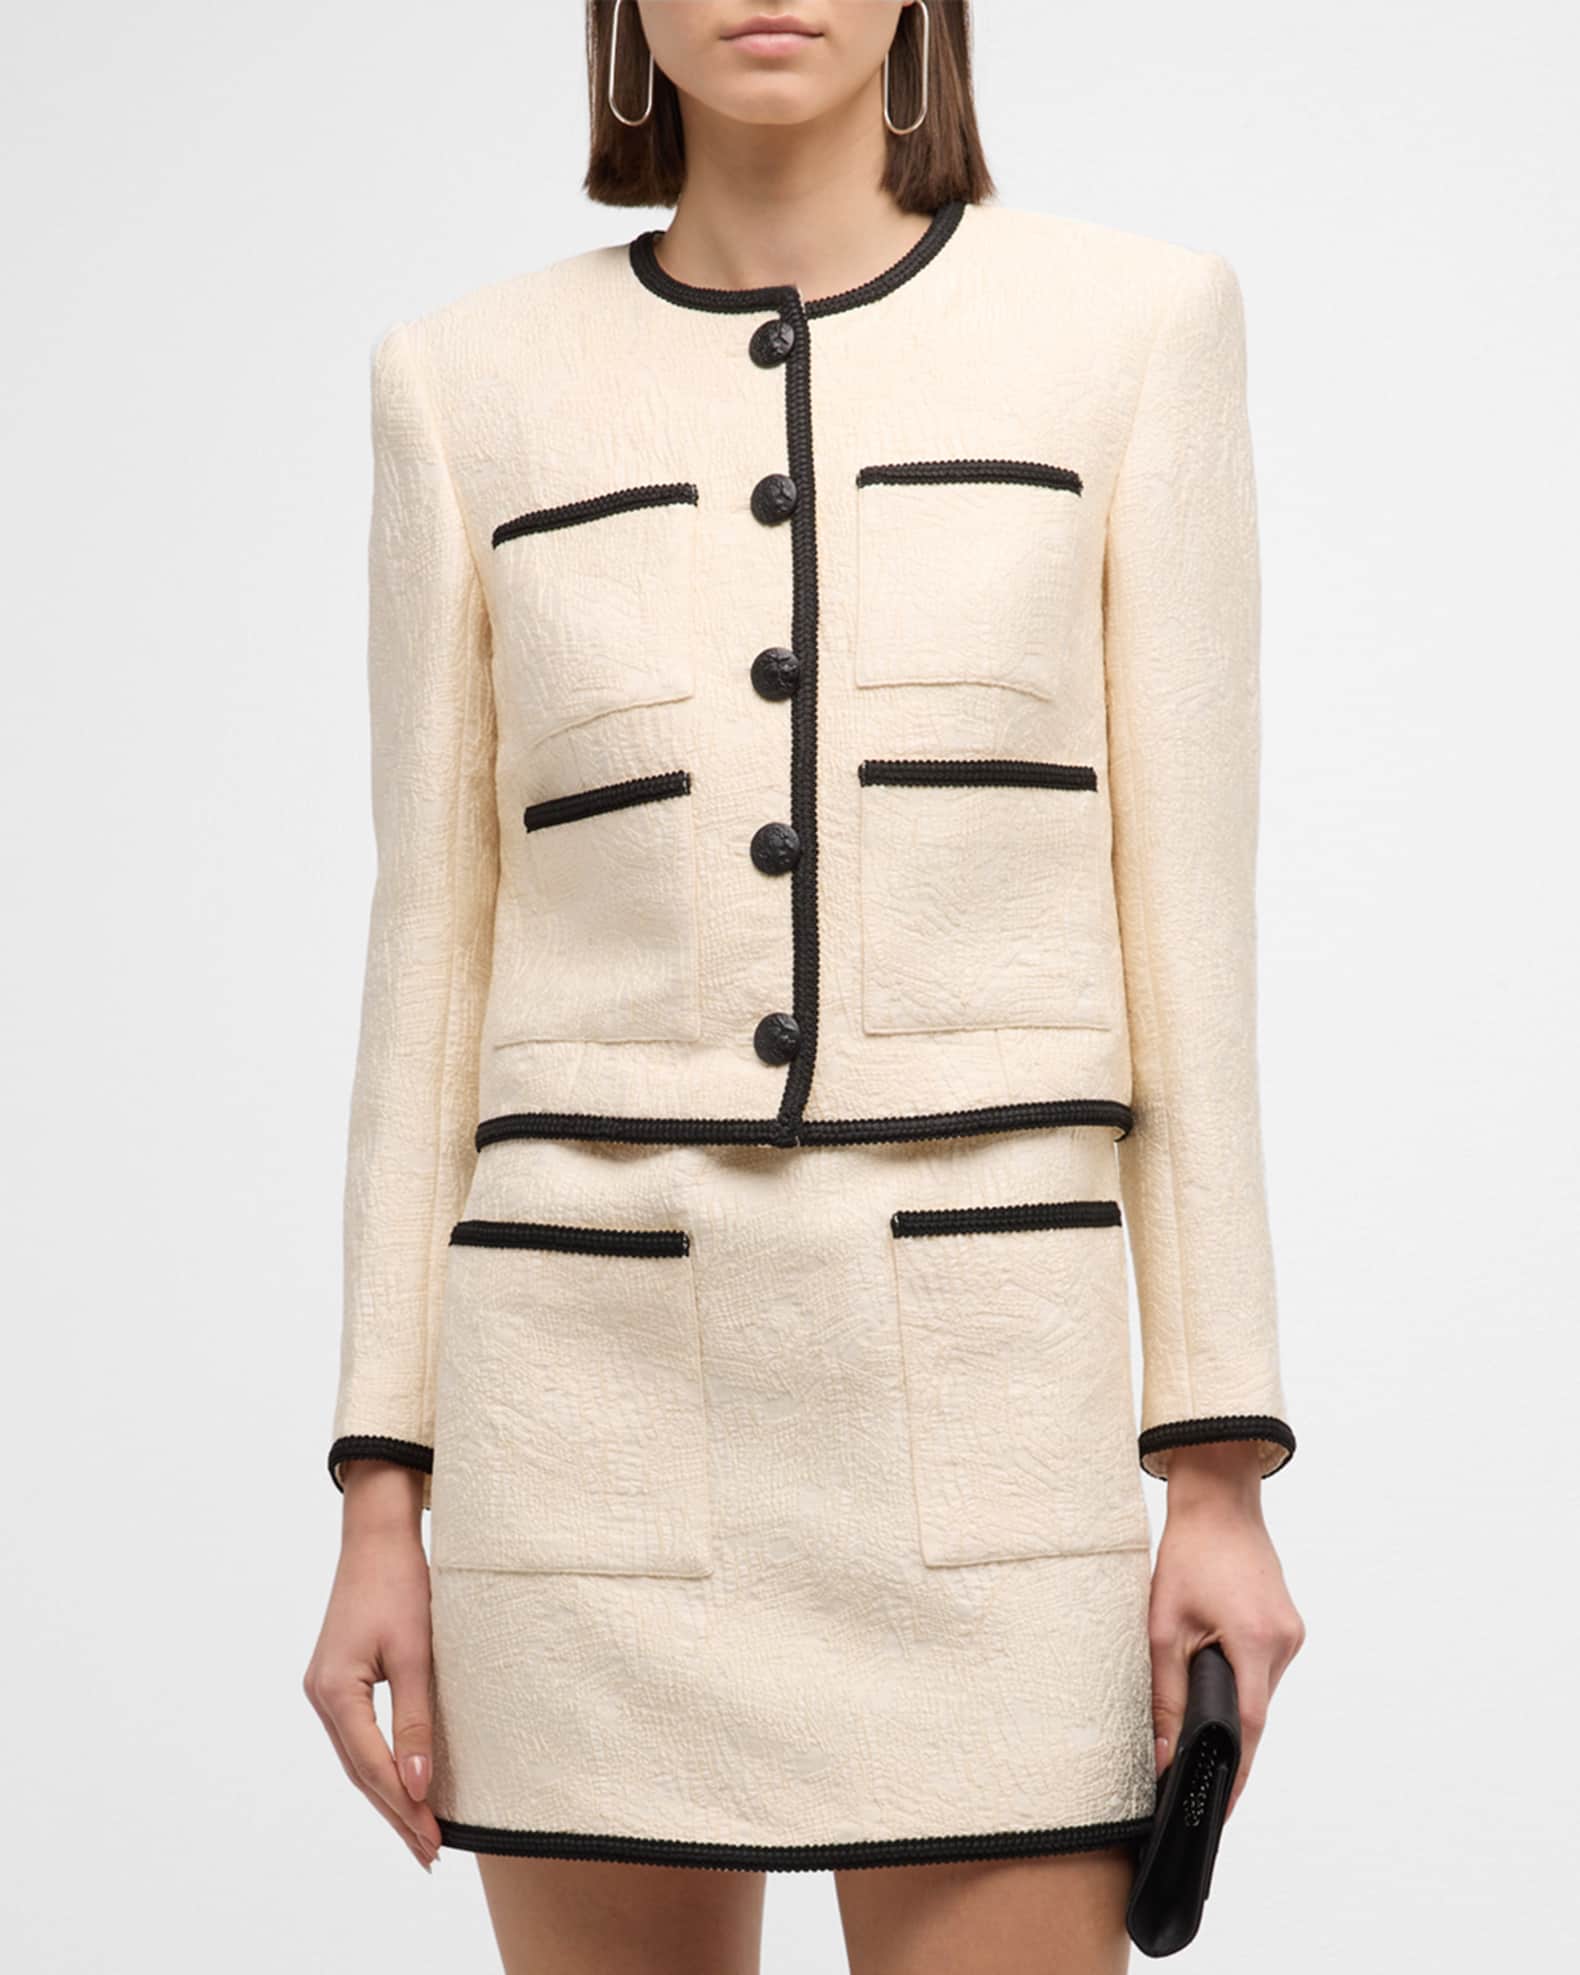 Veronica Beard Darla Tailored Jacquard Jacket | Neiman Marcus